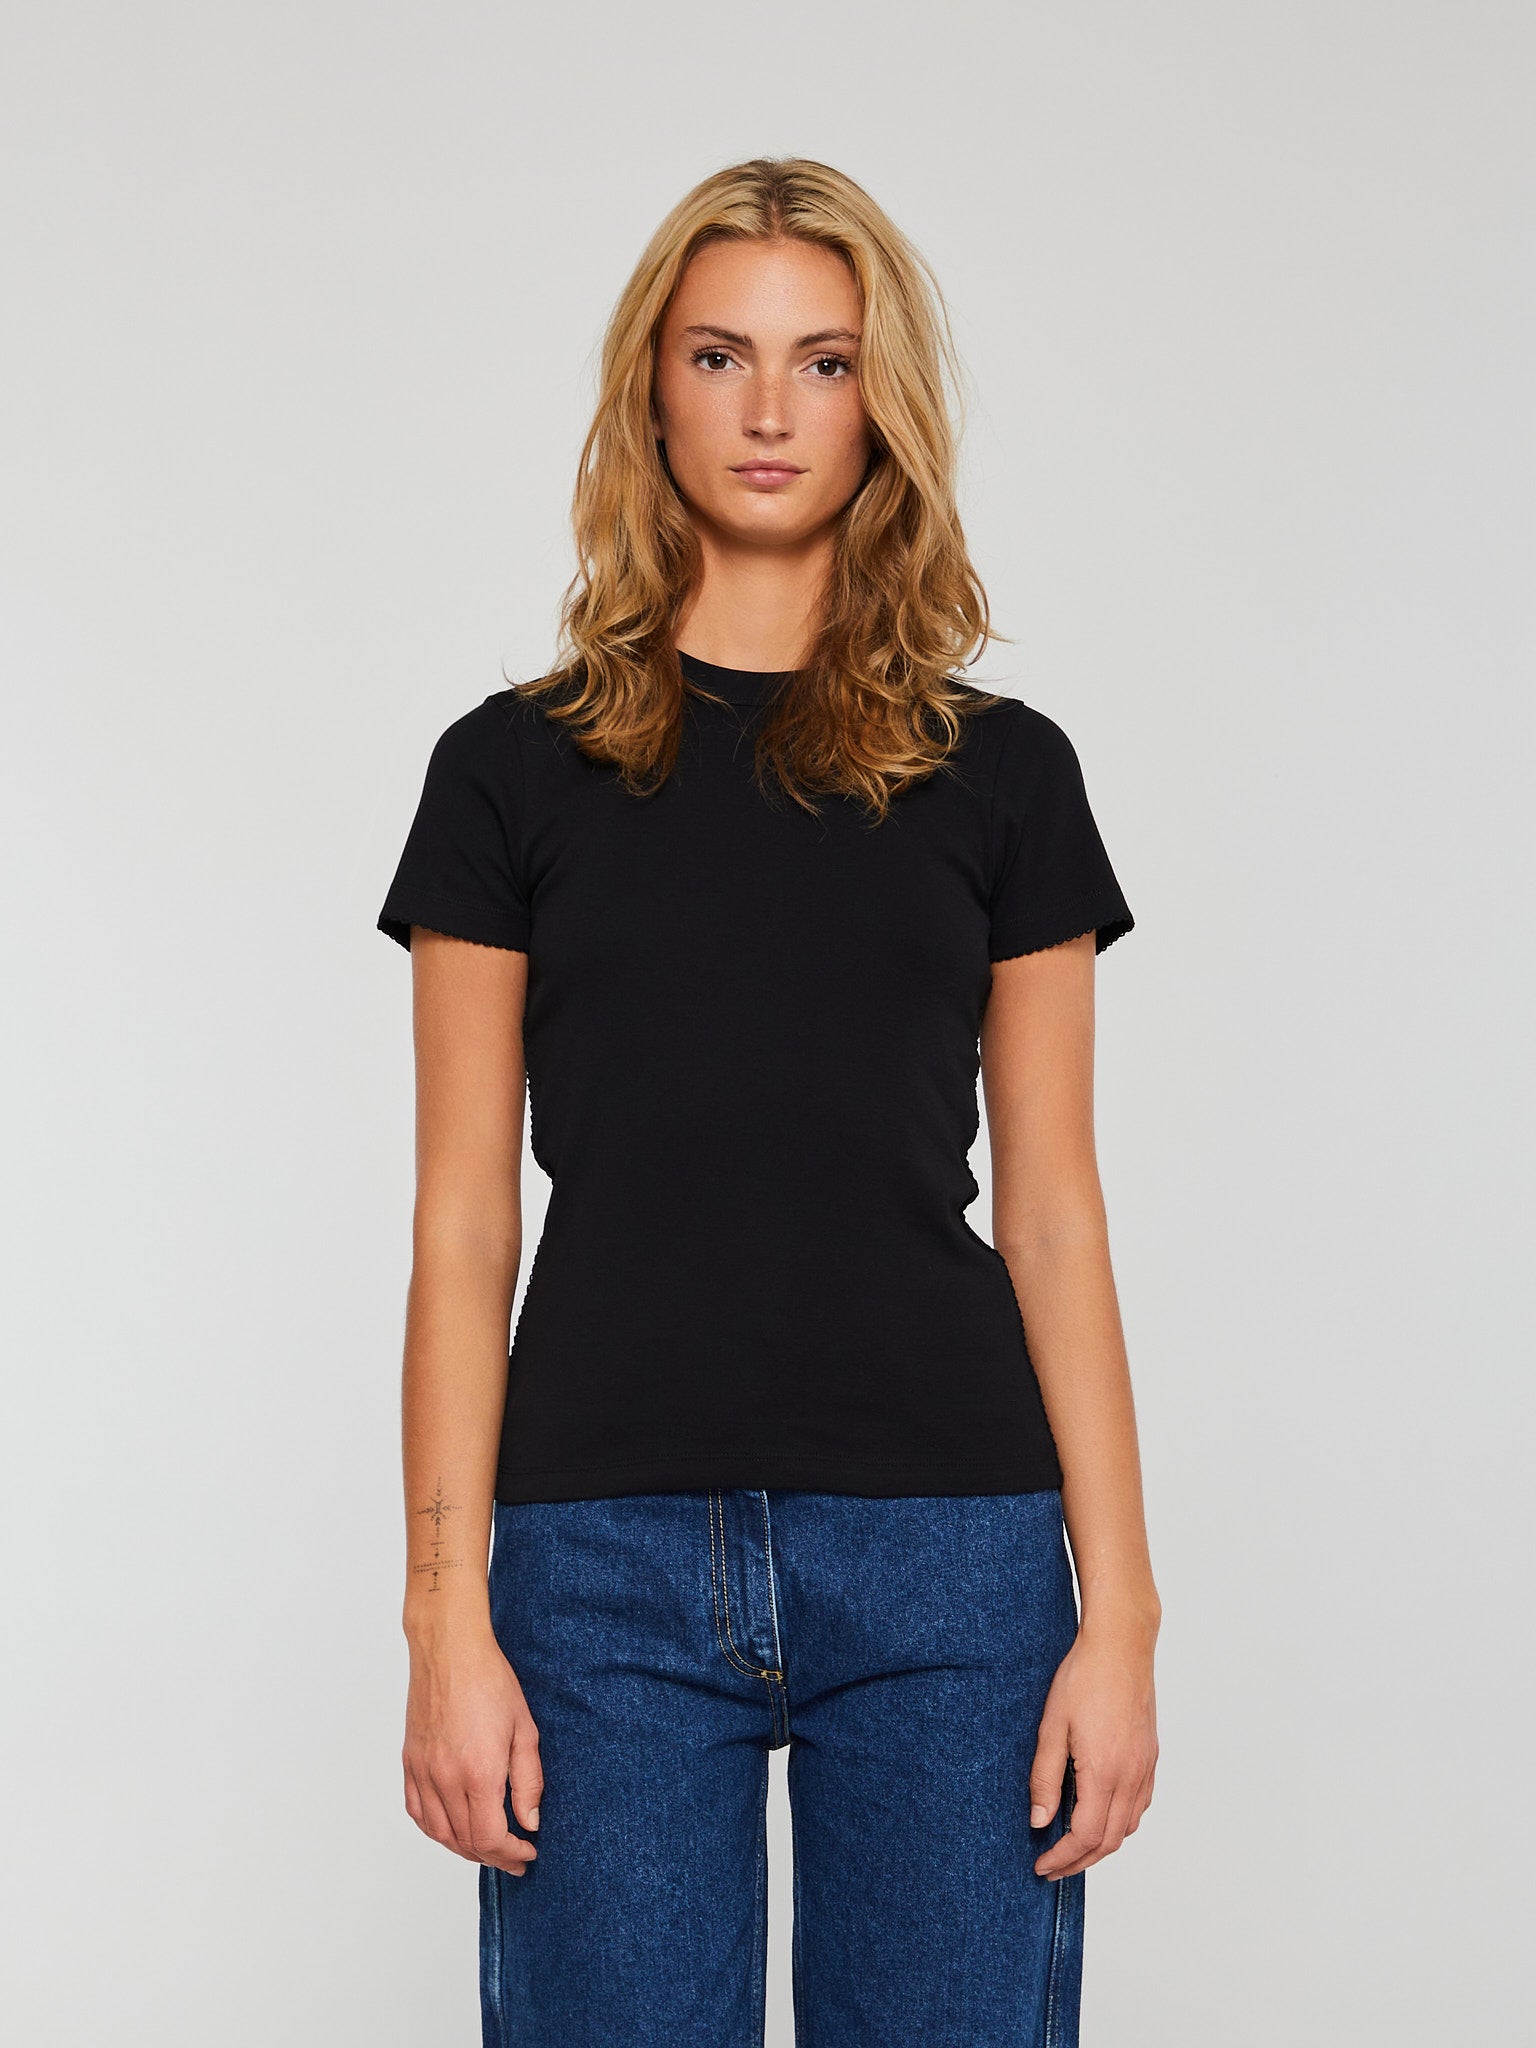 JWZUY Womens Cold Shoulder Long Sleeve T Shirts Casual Plain Elegant Slim  Fit Tops Stretchy V Neck Shirts Blouse Black M 